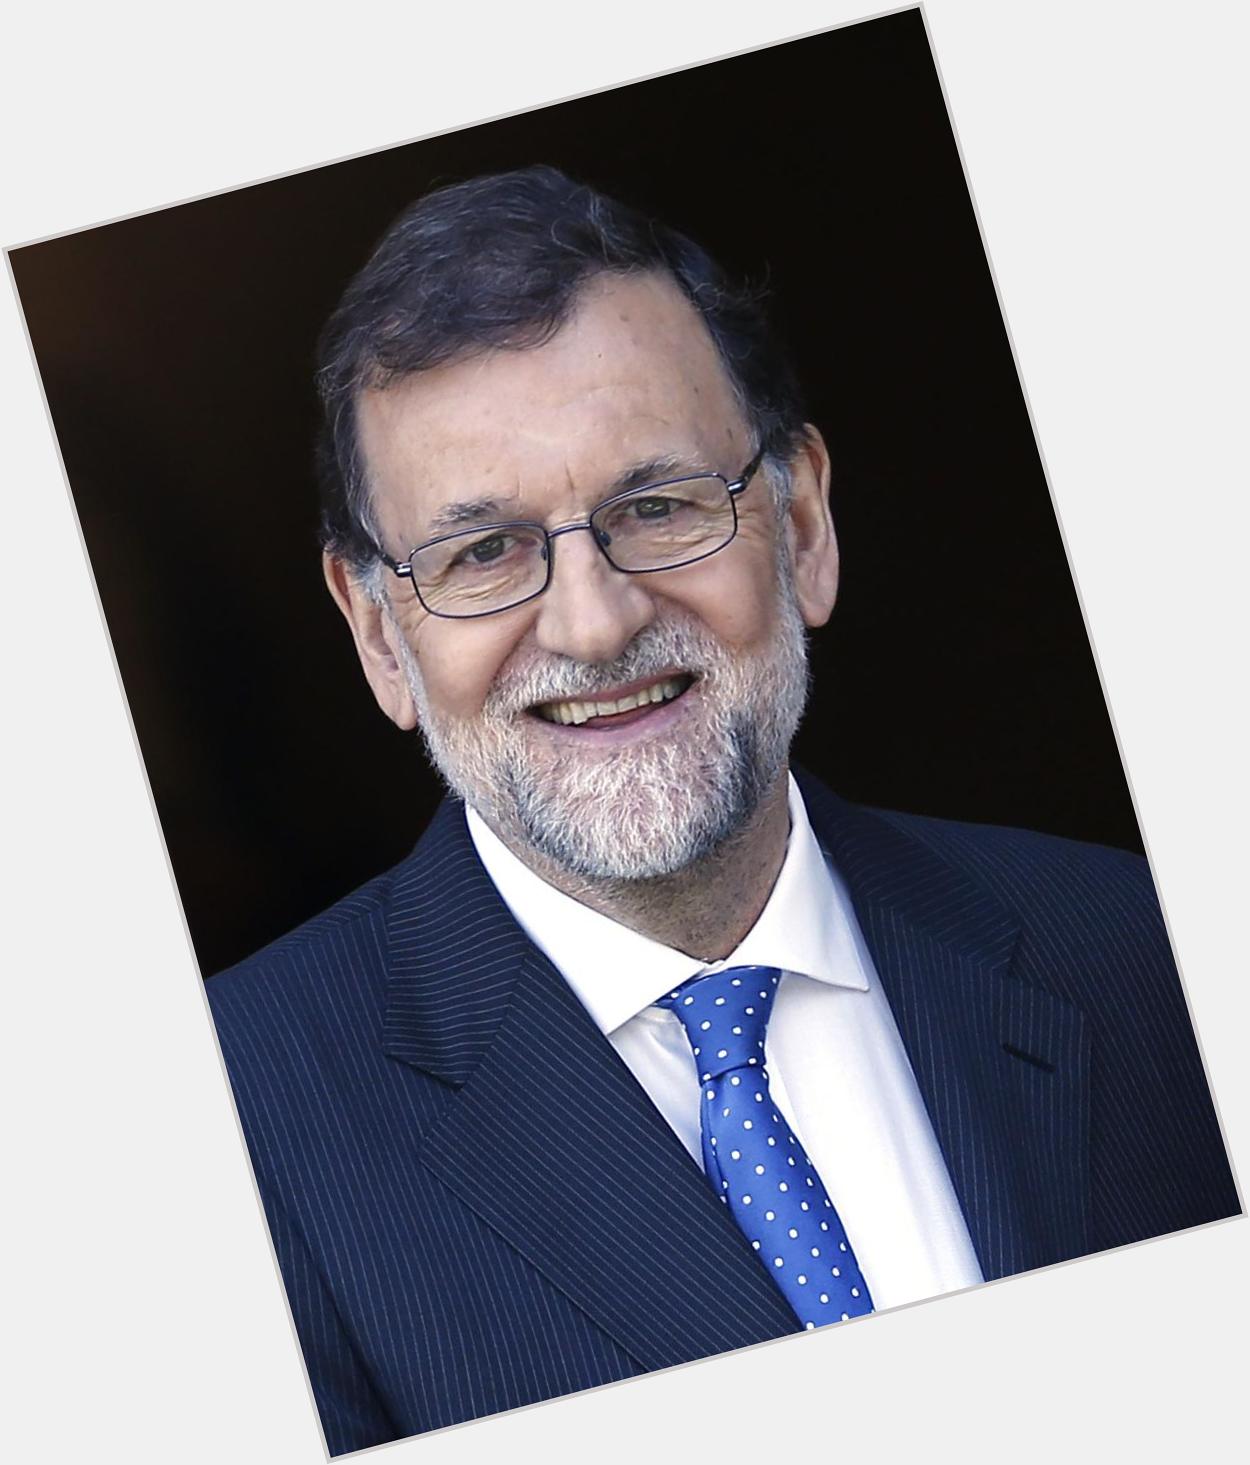 Mariano Rajoy dating 2